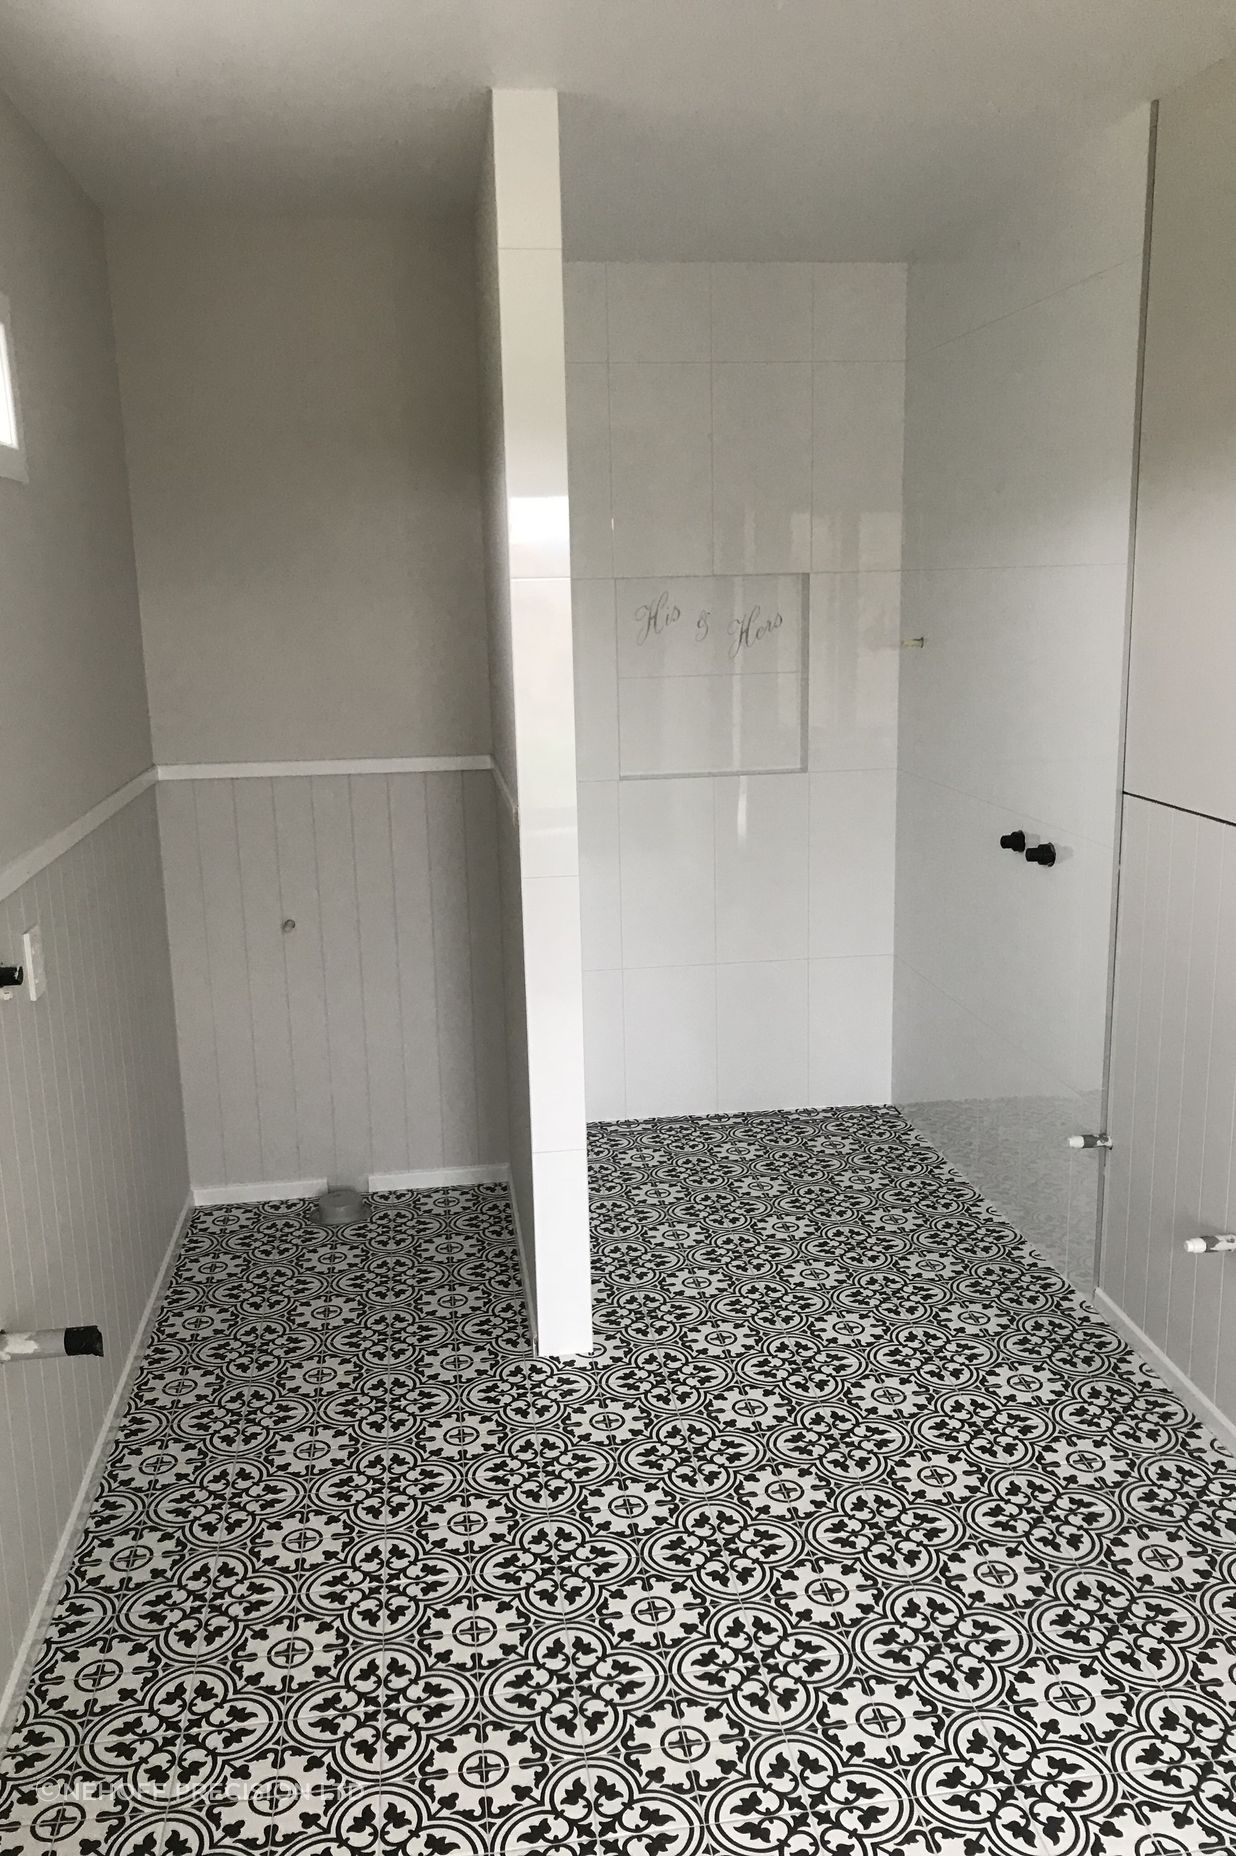 Tiled bathroom floor and shower walls